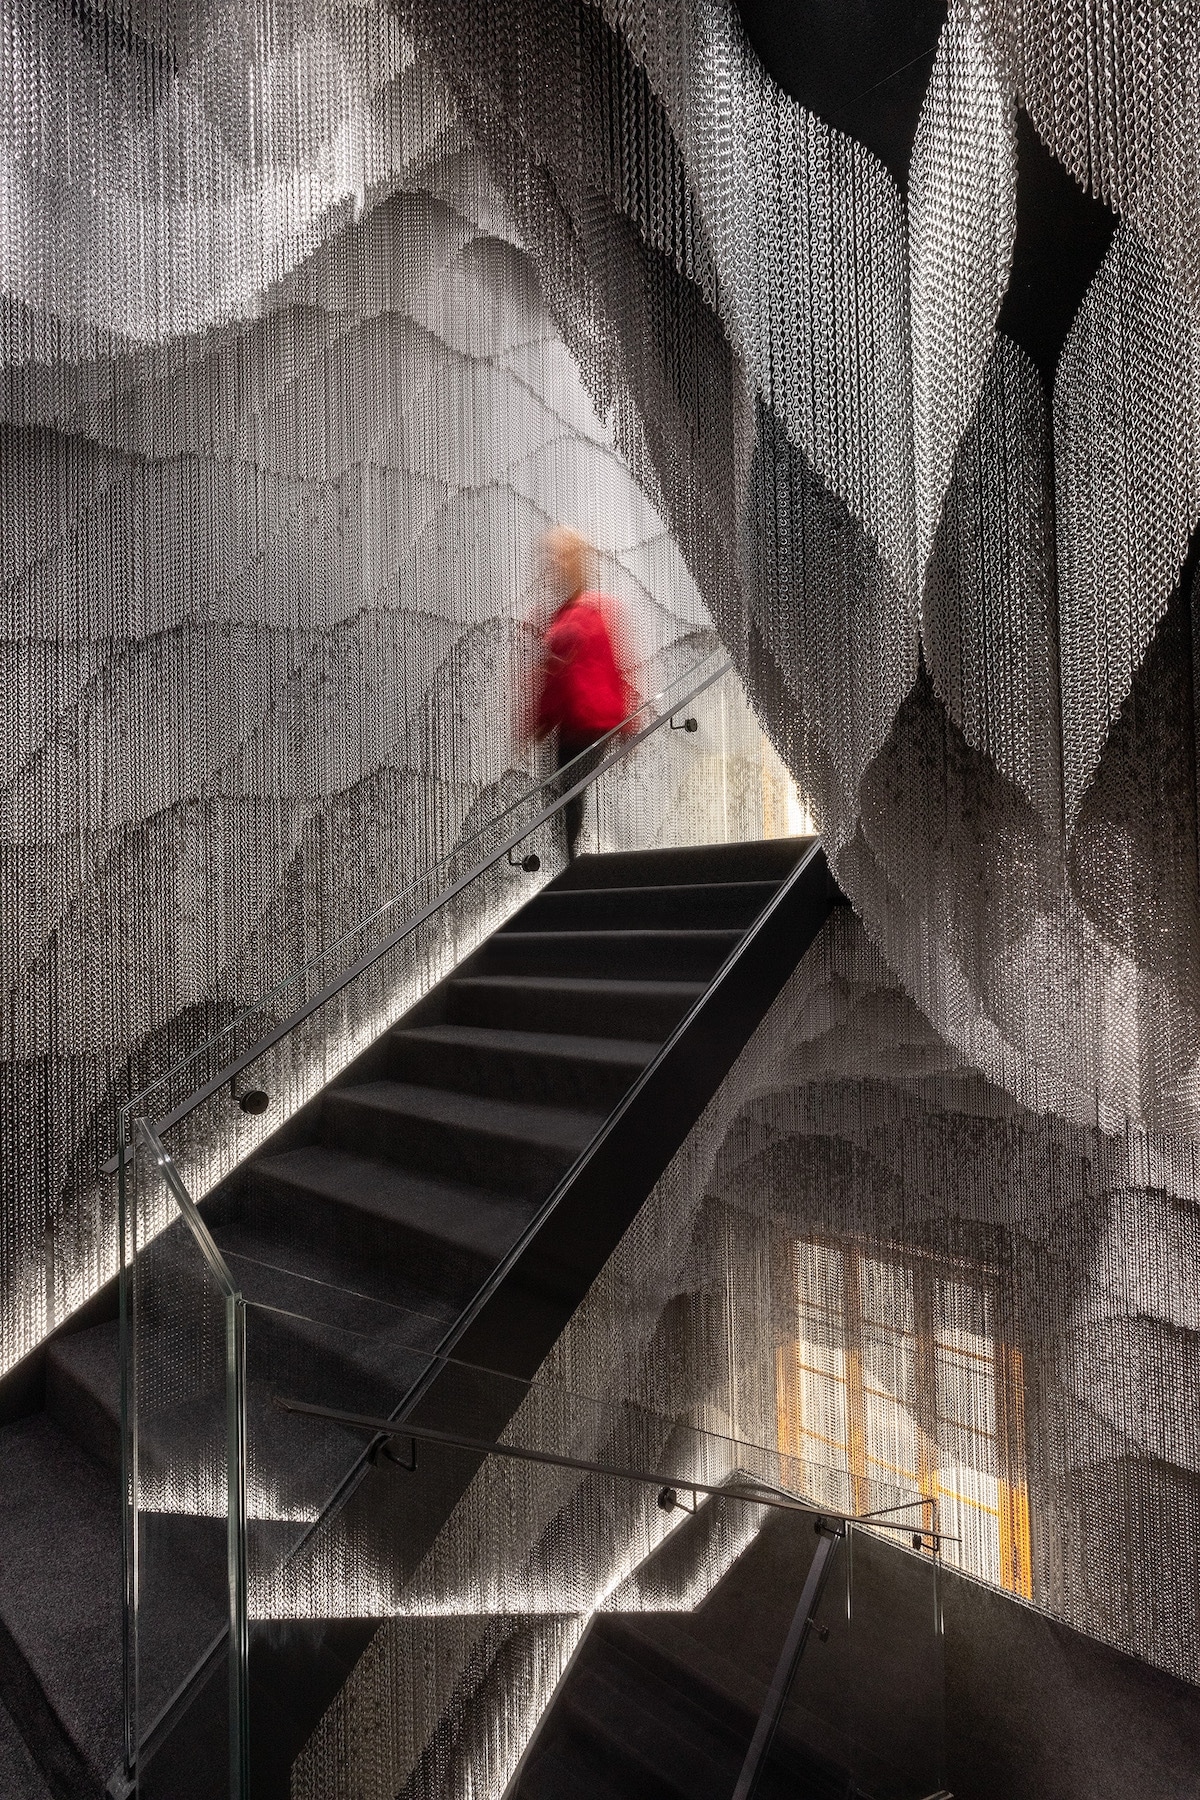 Expérience Casa Batlló 10D avec escalier conçu par Kengo Kuma